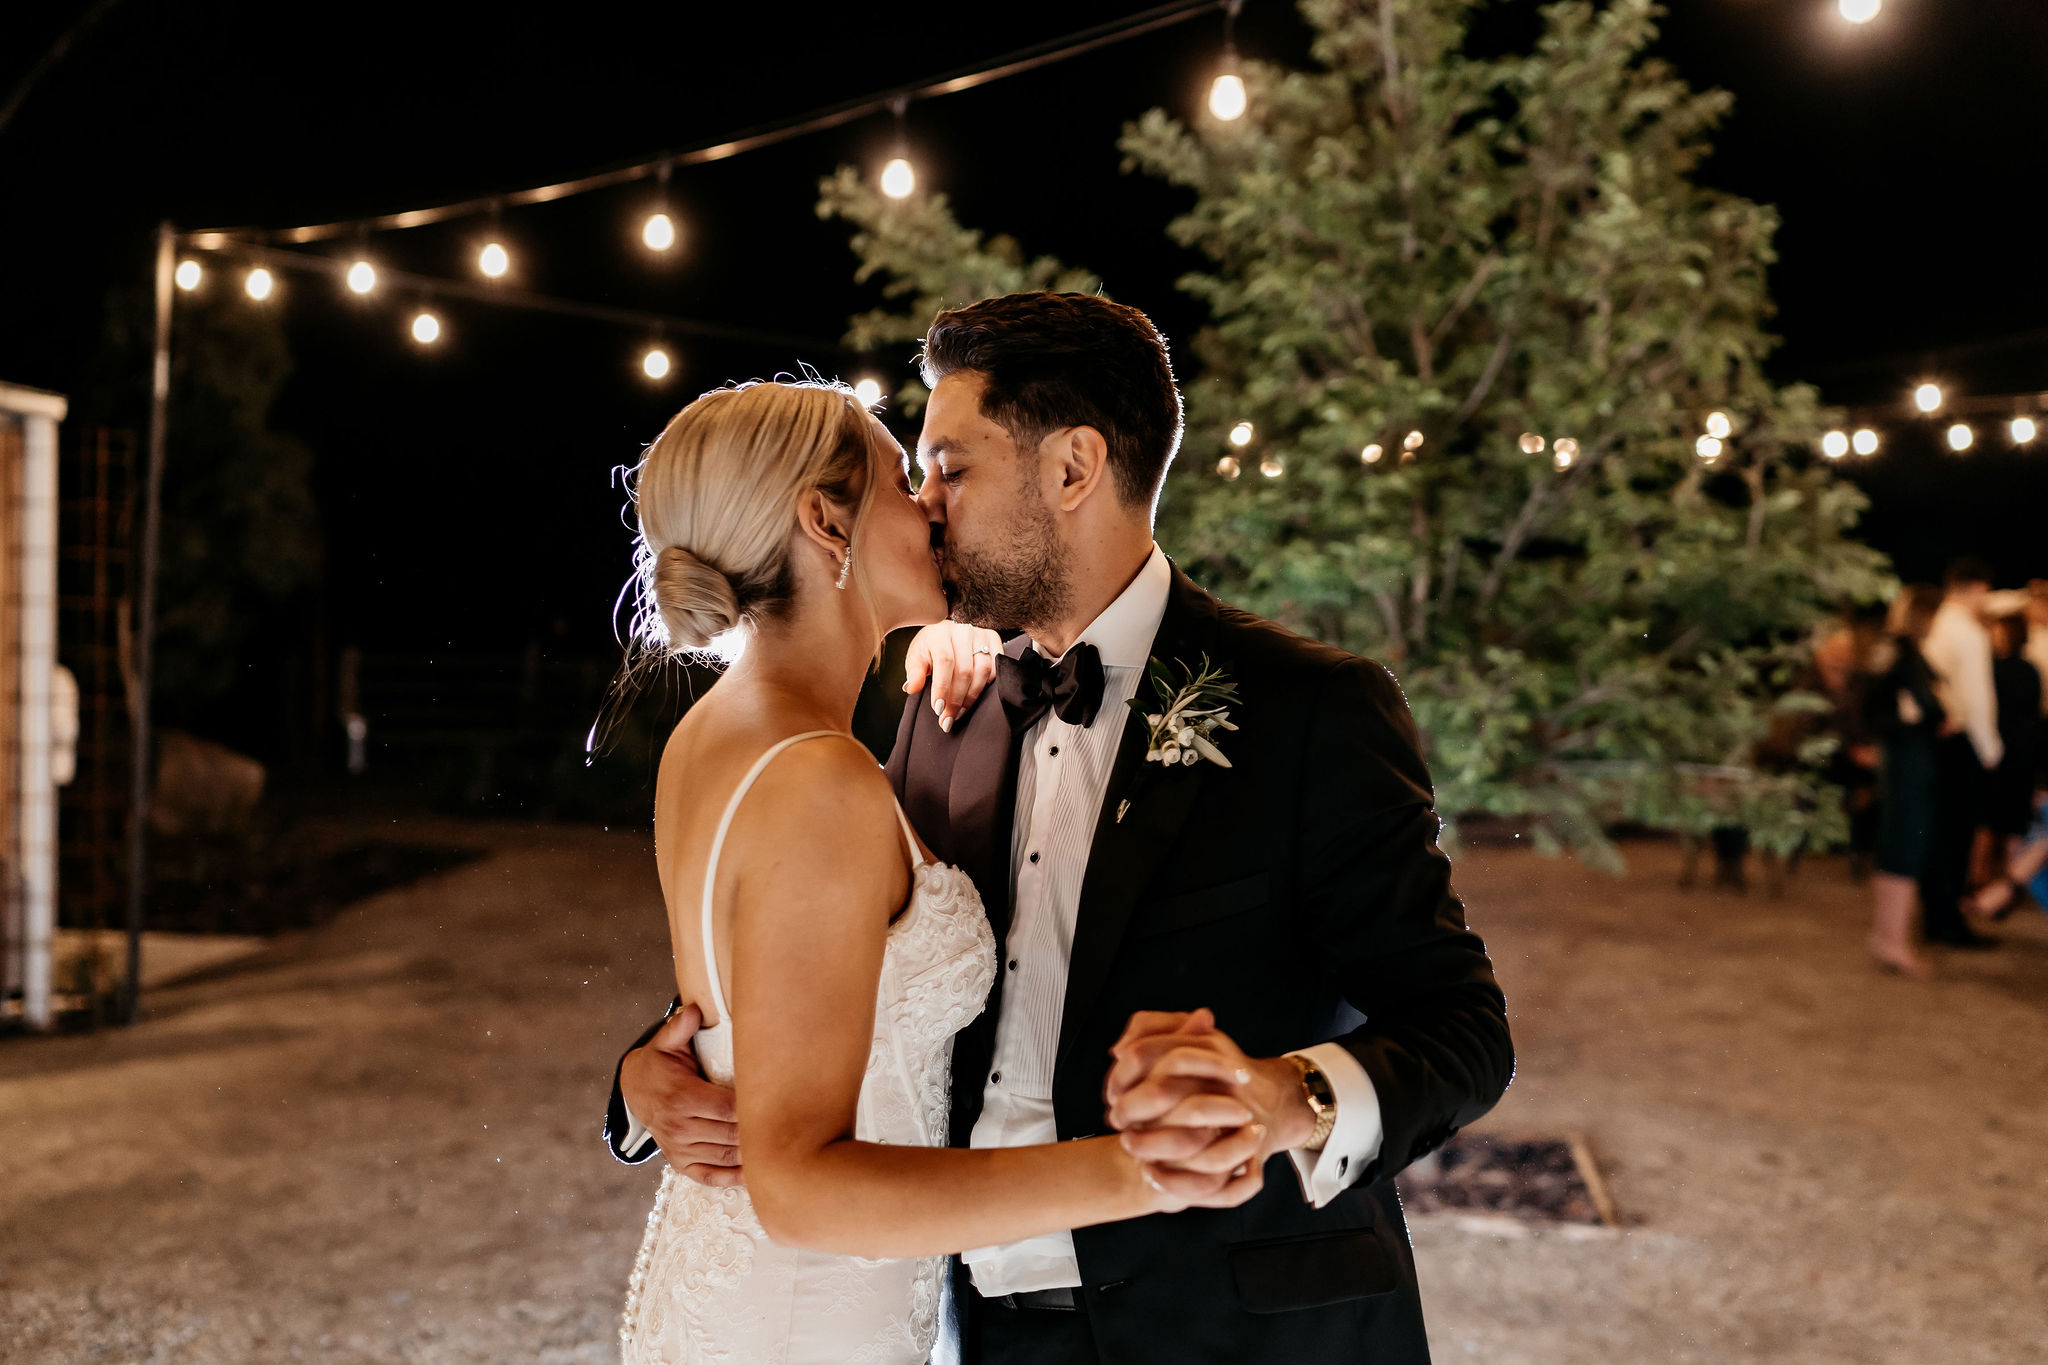 Erin & Luke's wedding under festoon lights